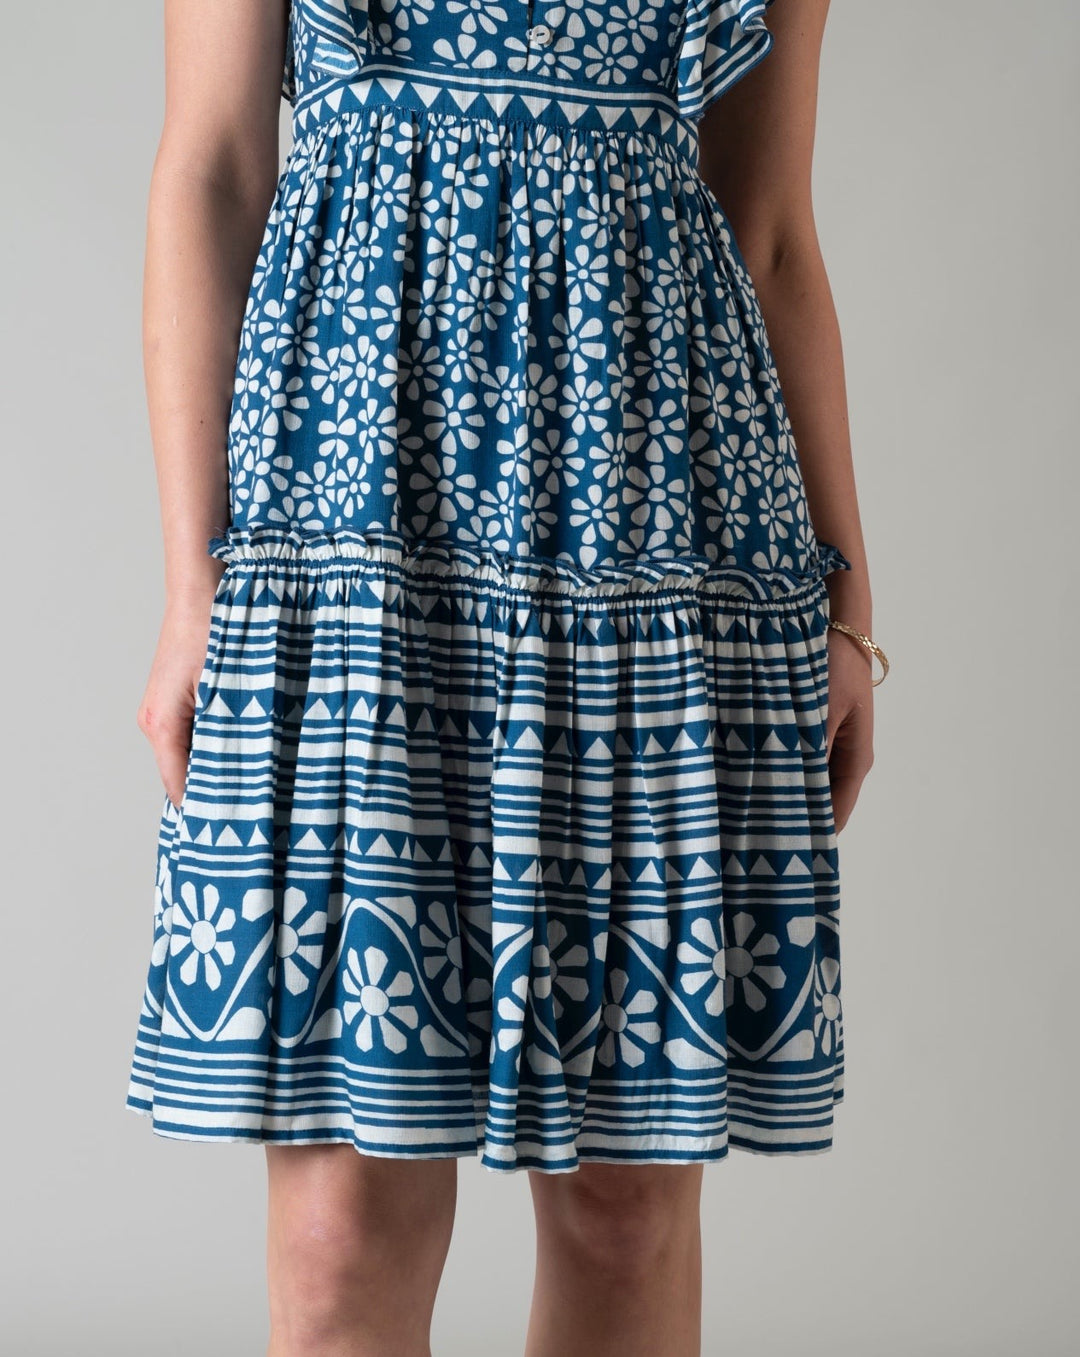 Anna Printed Dress